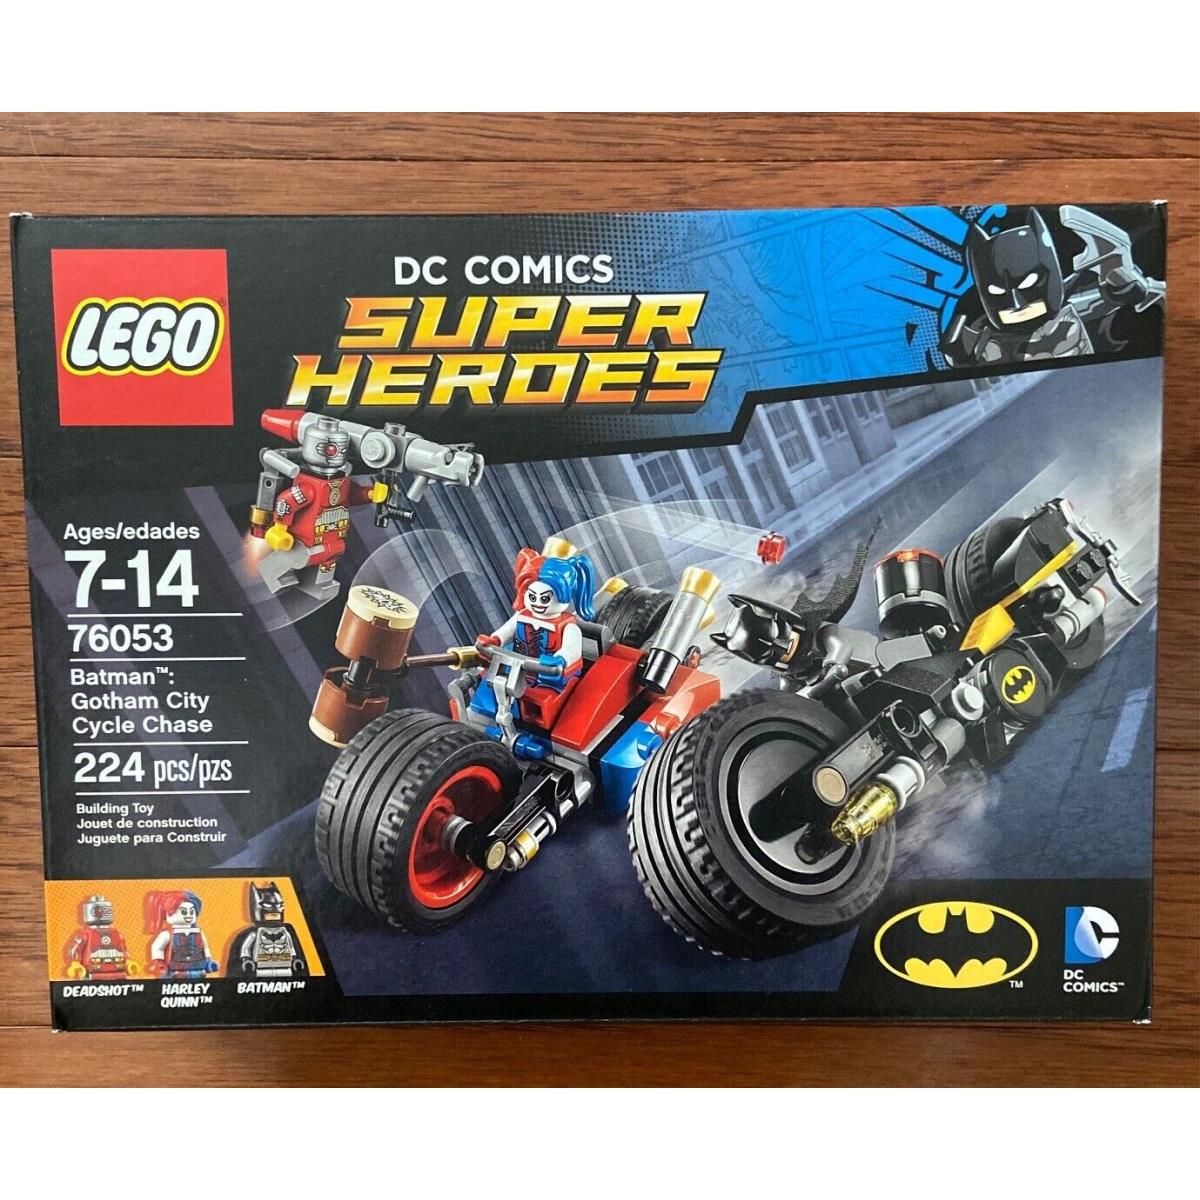 Lego DC Comics Superheroes - Batman Gotham City Cycle Chase 76053 /harley Quinn